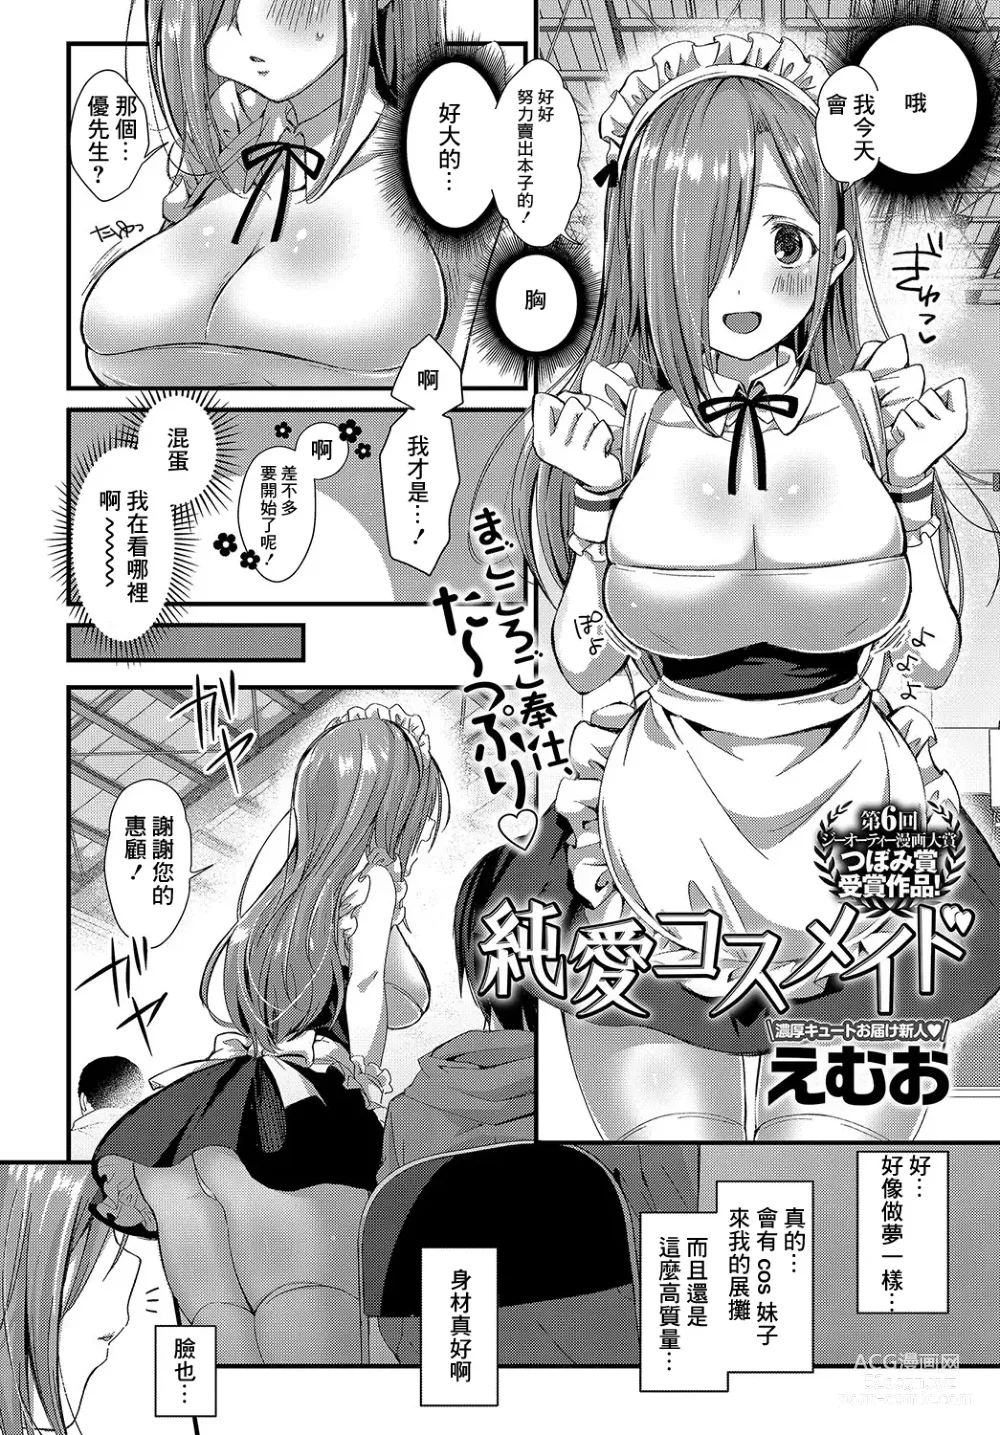 Page 2 of manga Junai Cos Maid